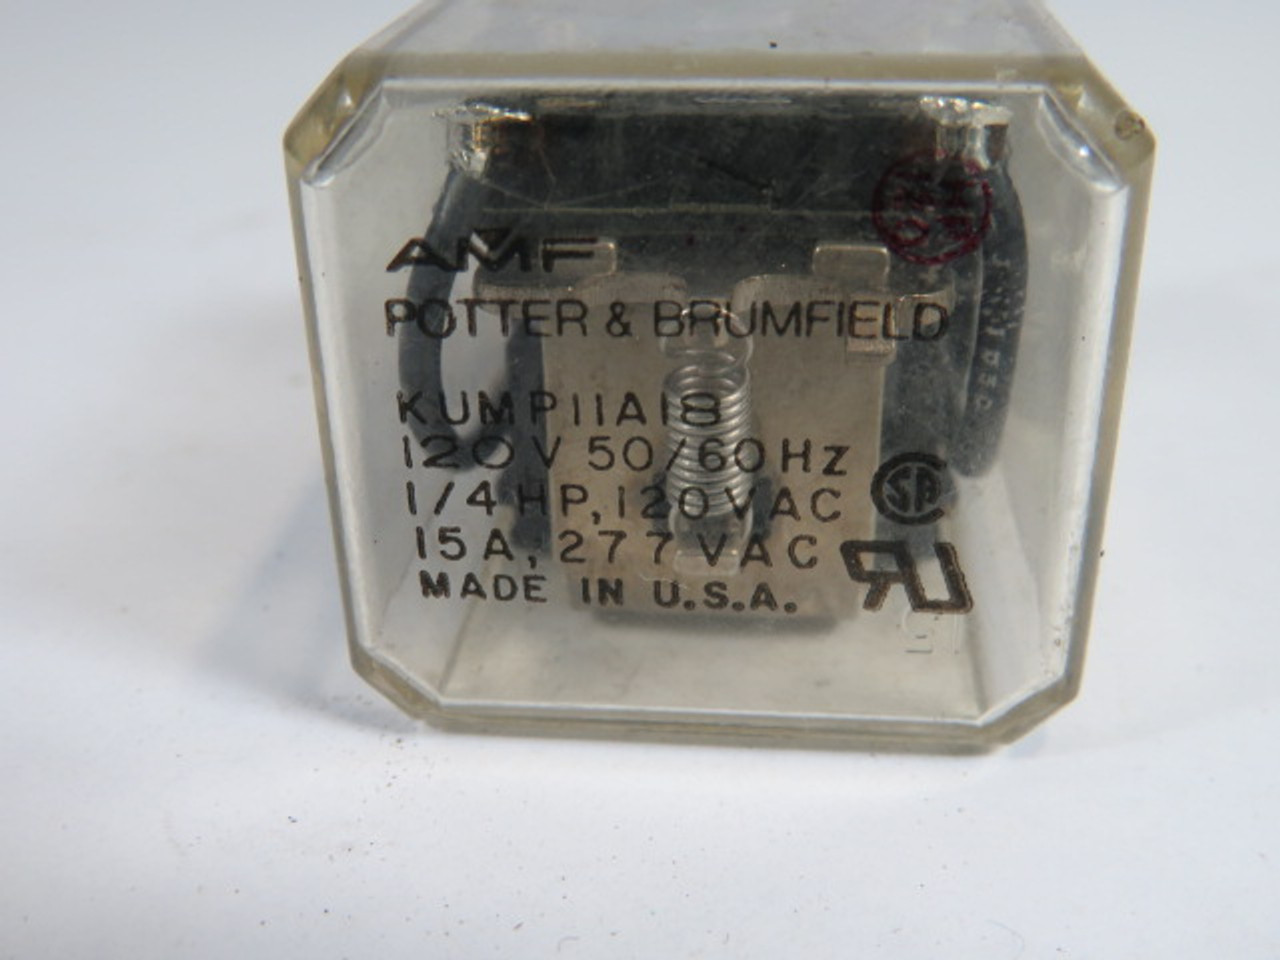 Potter & Brumfield KUMP11A18-120 Relay 120V 50/60HZ USED